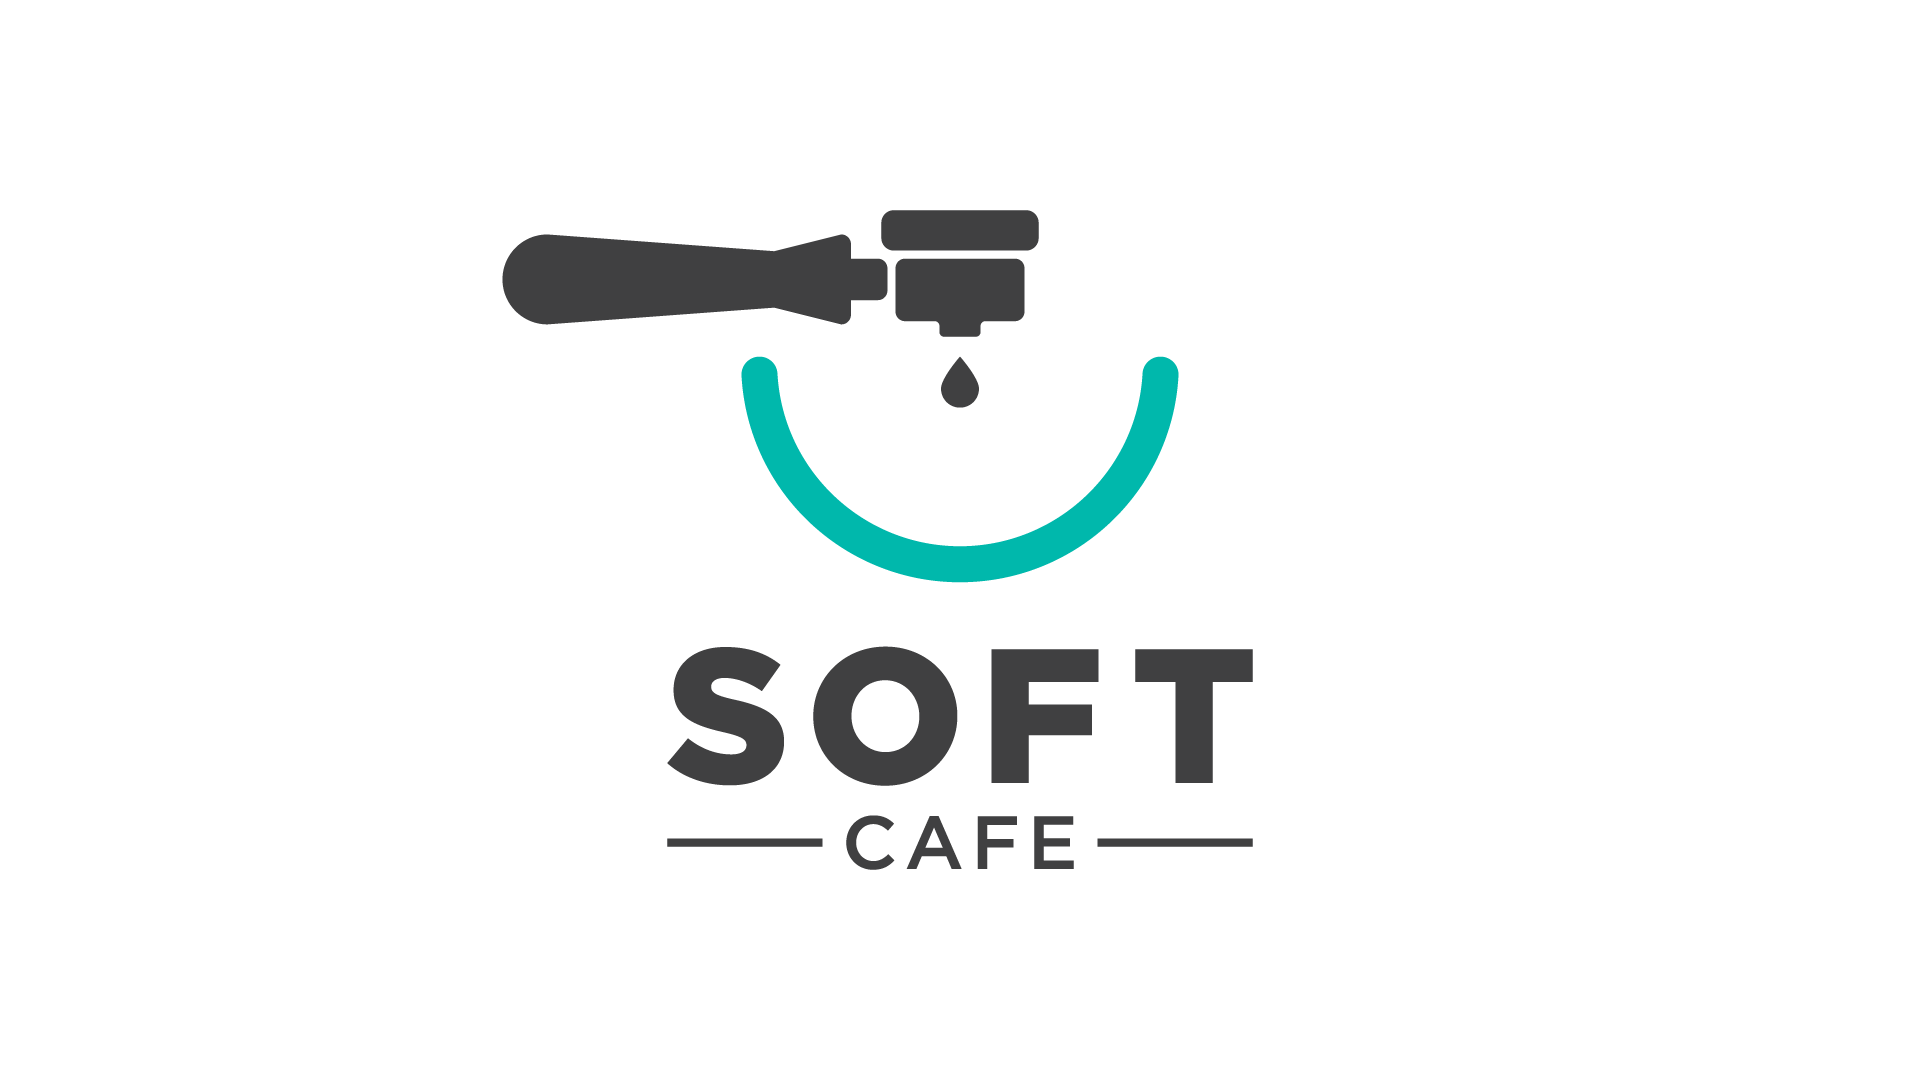 Soft Cafe logo suite